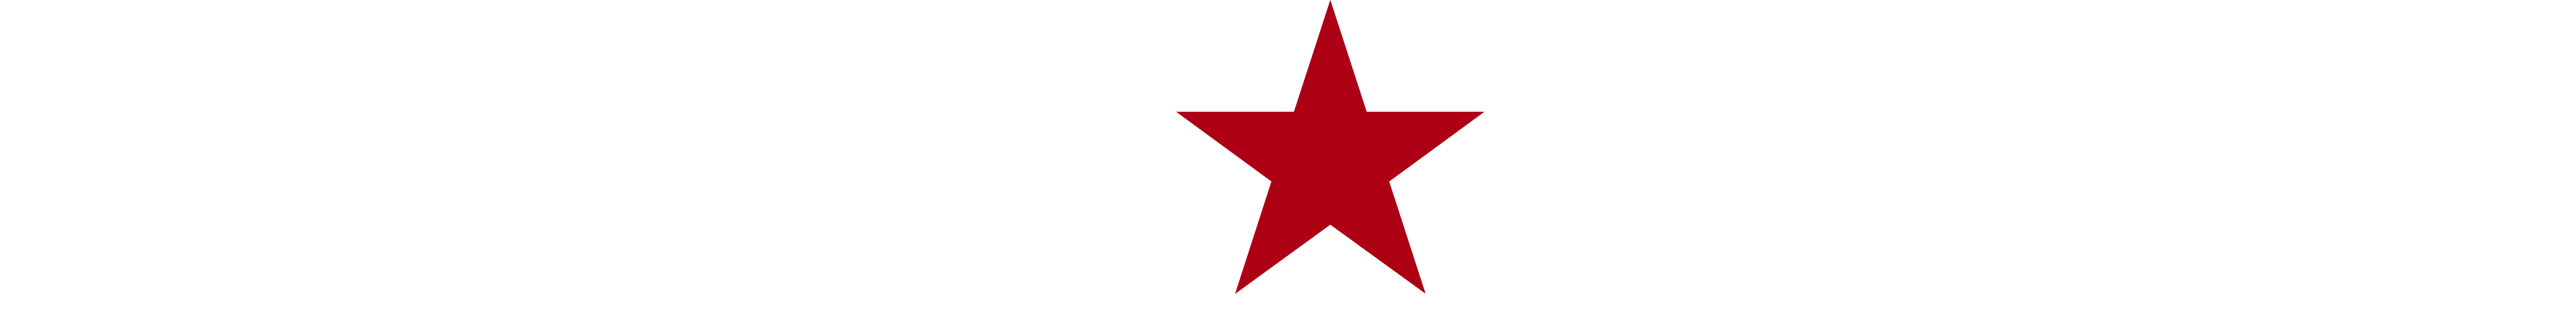 Kruger Cowne logo